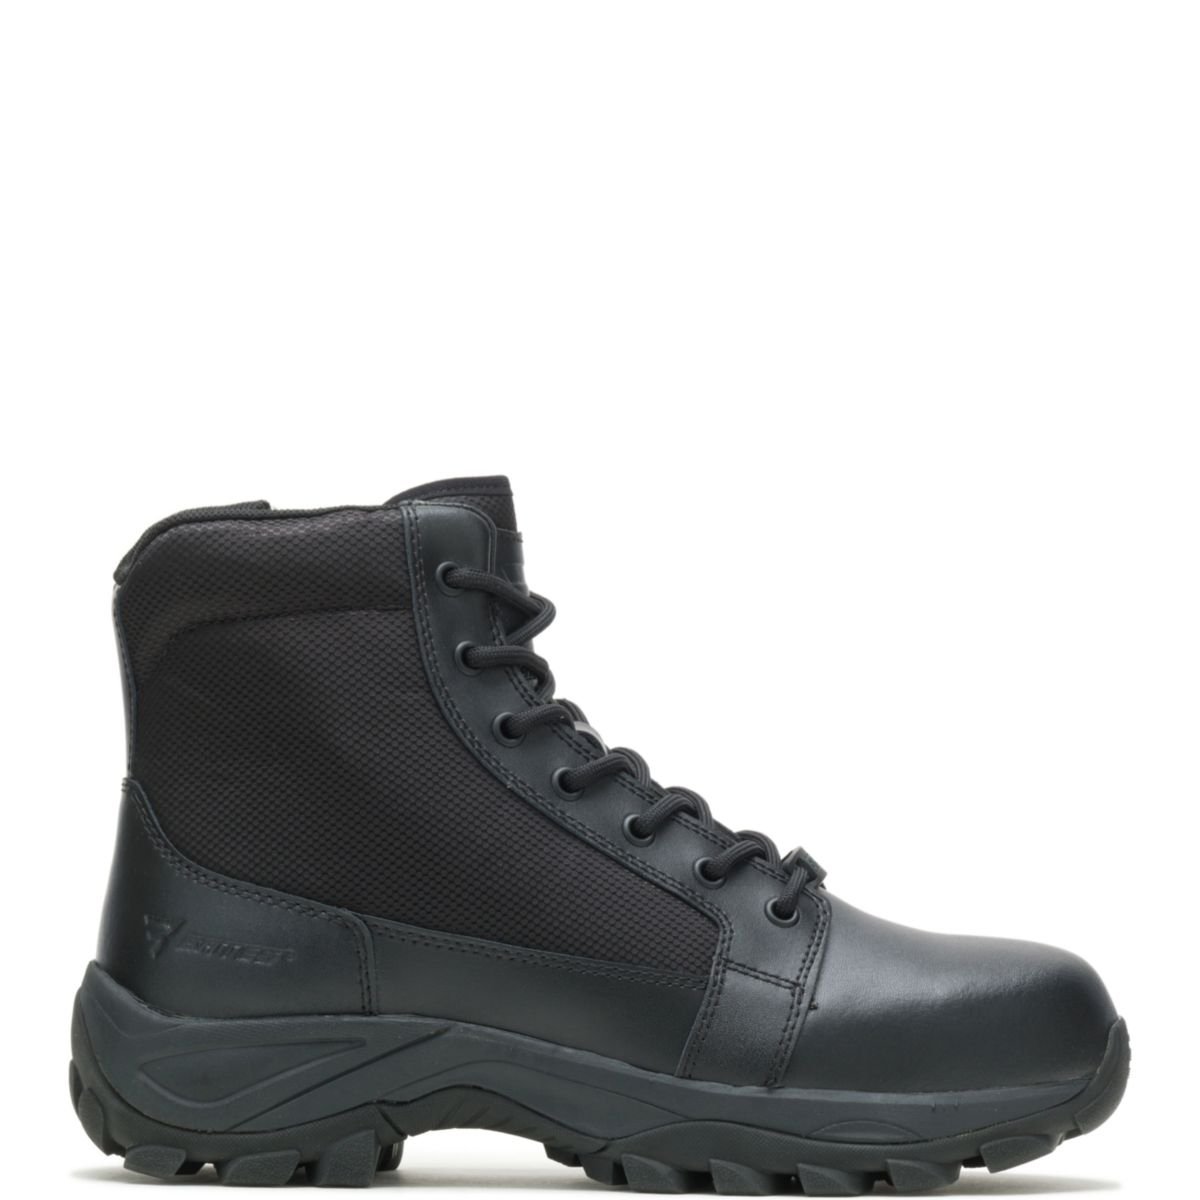 Bates Men's Fuse Zip 6-Inch Side Zip Steel Toe Work Boot Black - E06505 BLACK - BLACK, 12